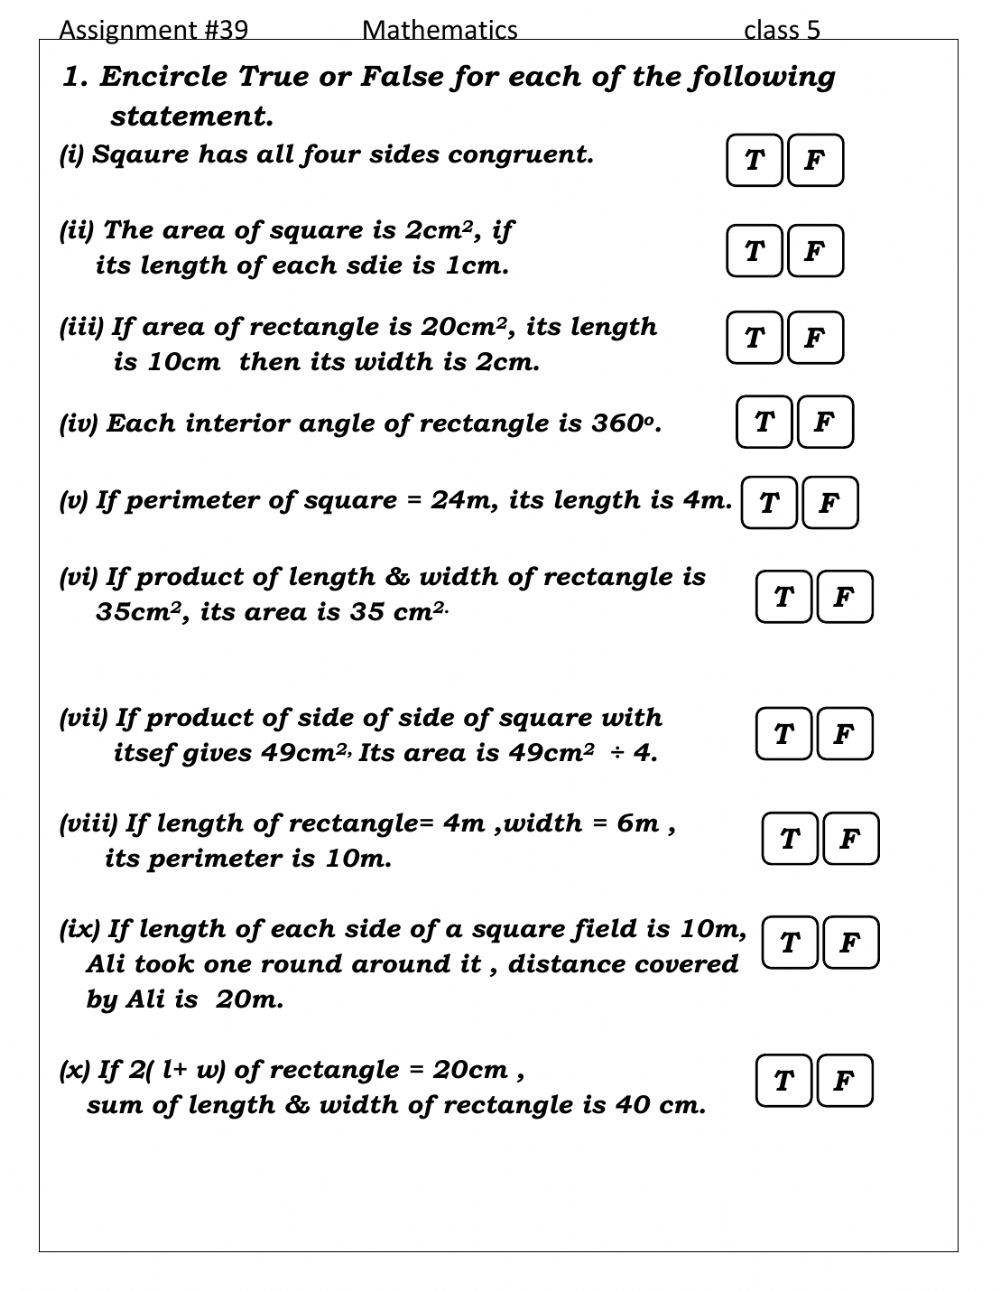 Assignment 39 Worksheet Math Worksheet Answers